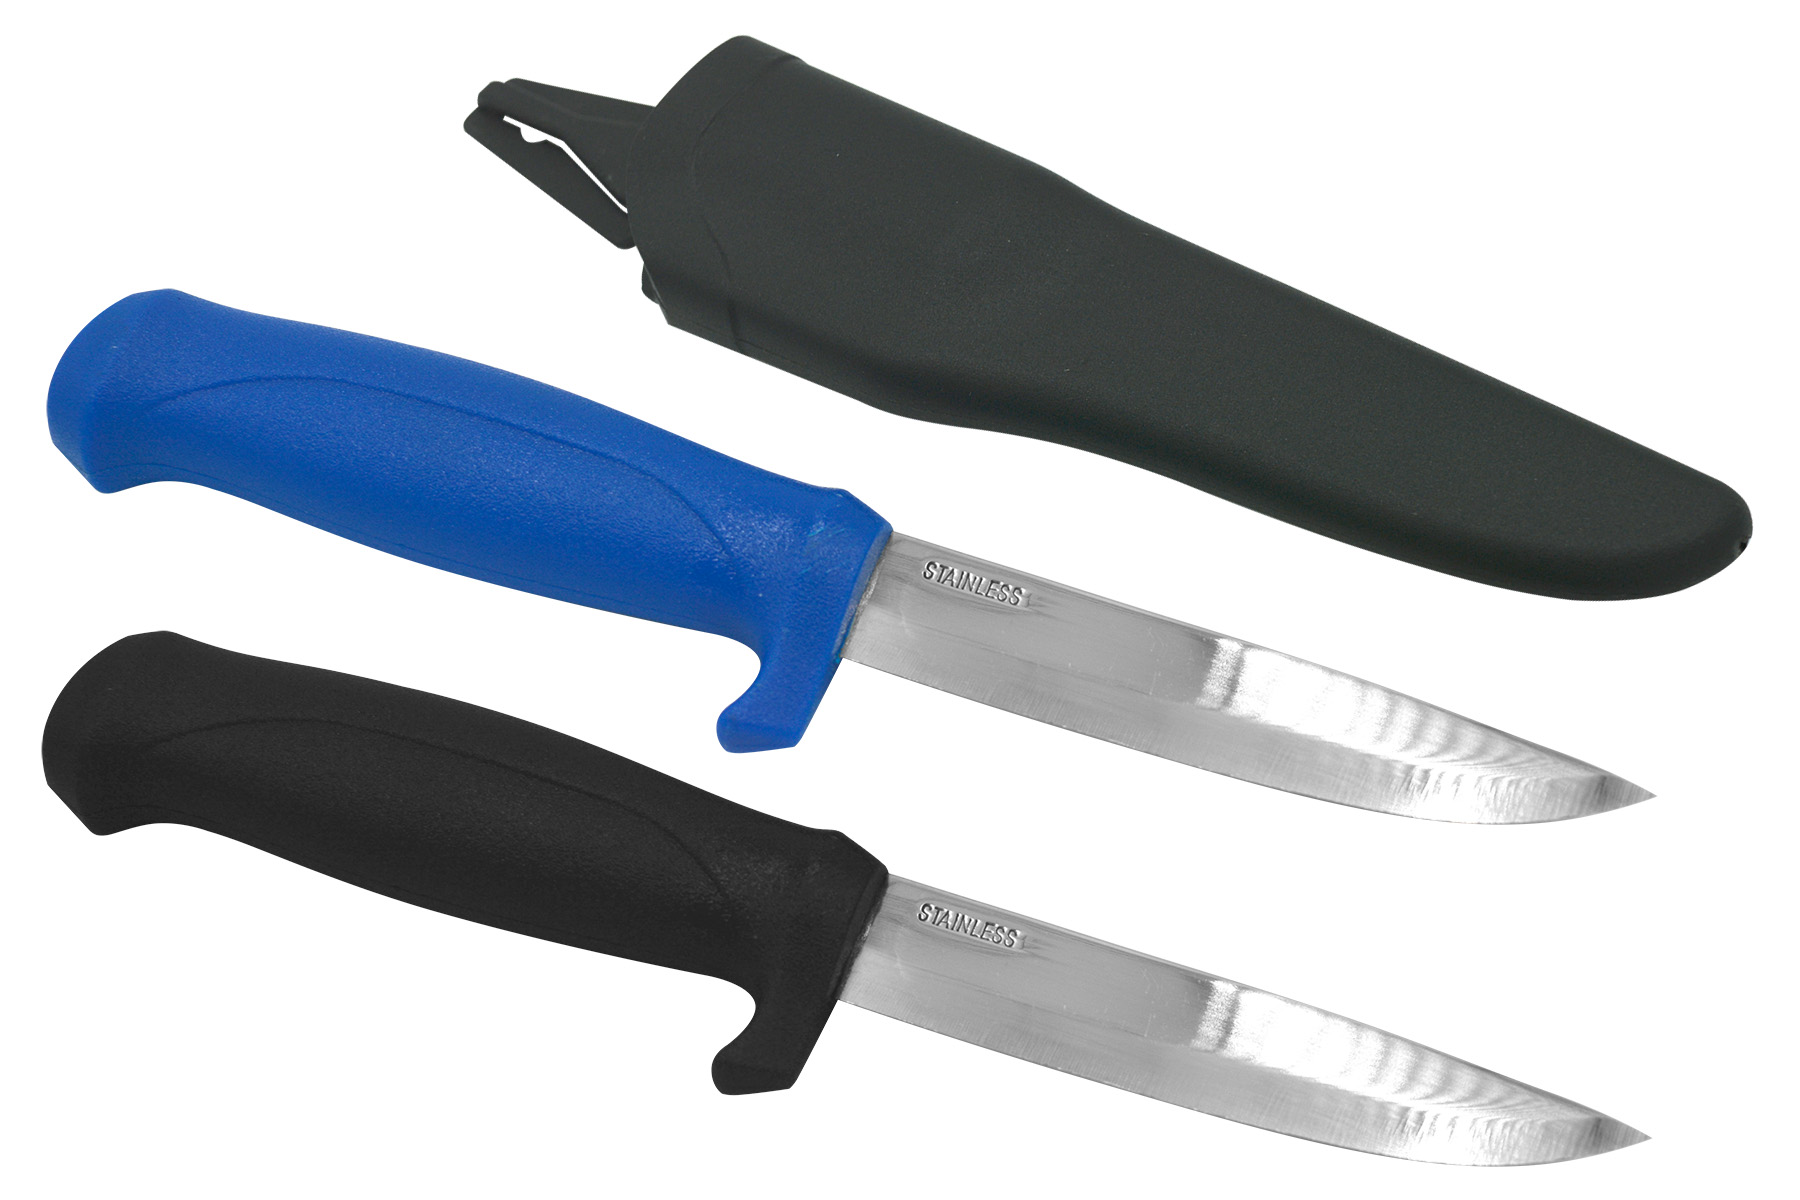 Zenport Blue Handle Multi-Purpose Knife 14012A-BLUE 4-inch Stainless Blade, Plastic Sheath